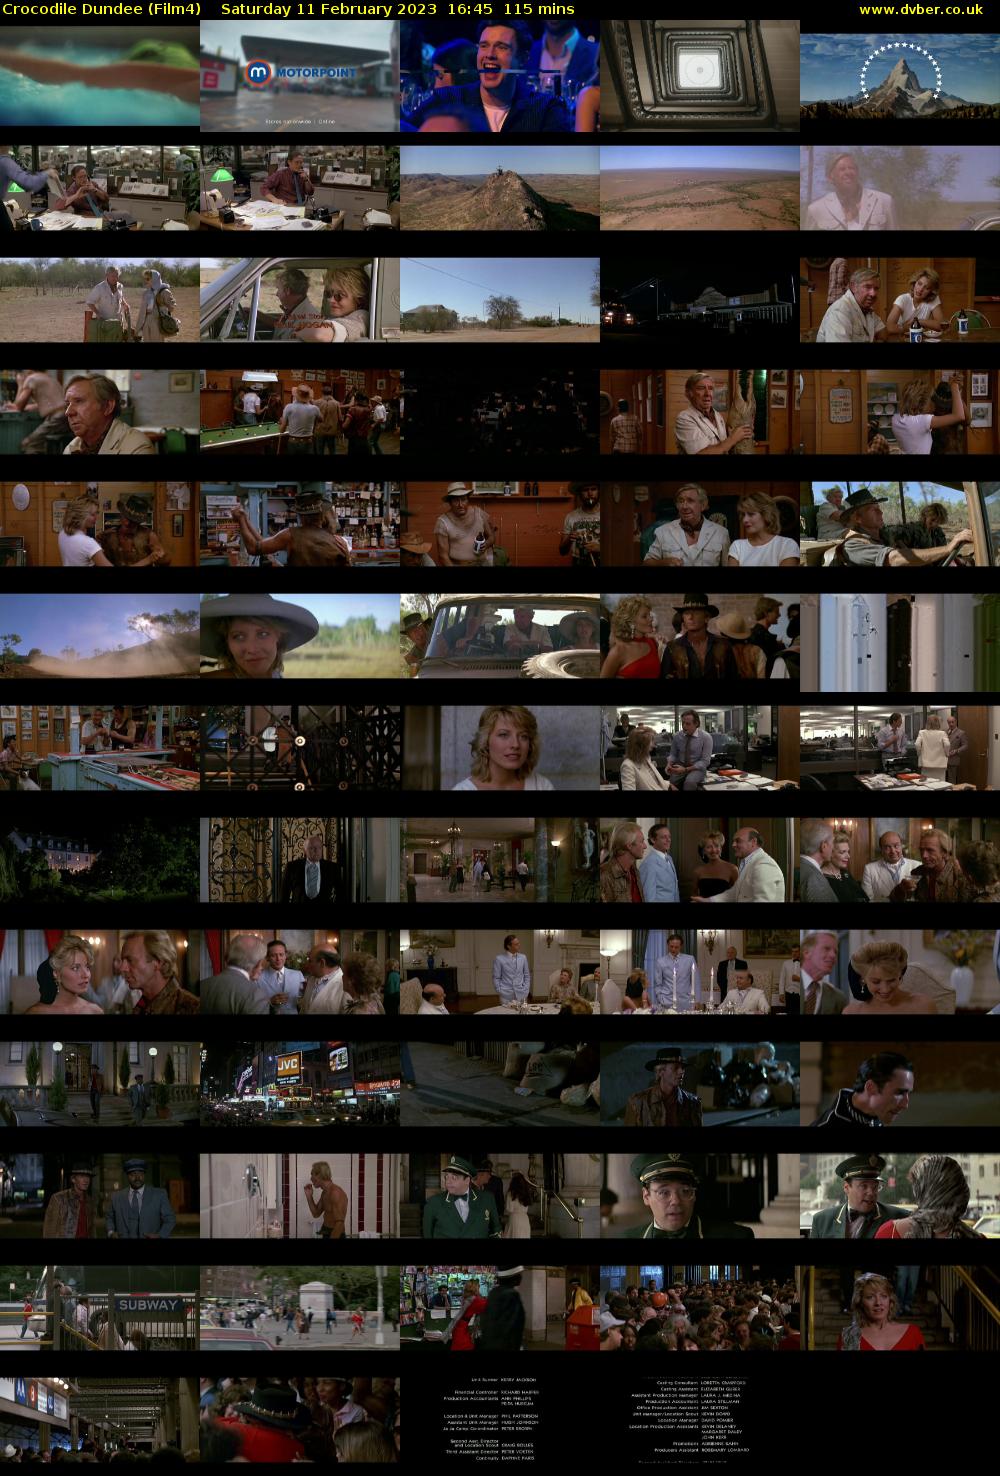 Crocodile Dundee (Film4) Saturday 11 February 2023 16:45 - 18:40